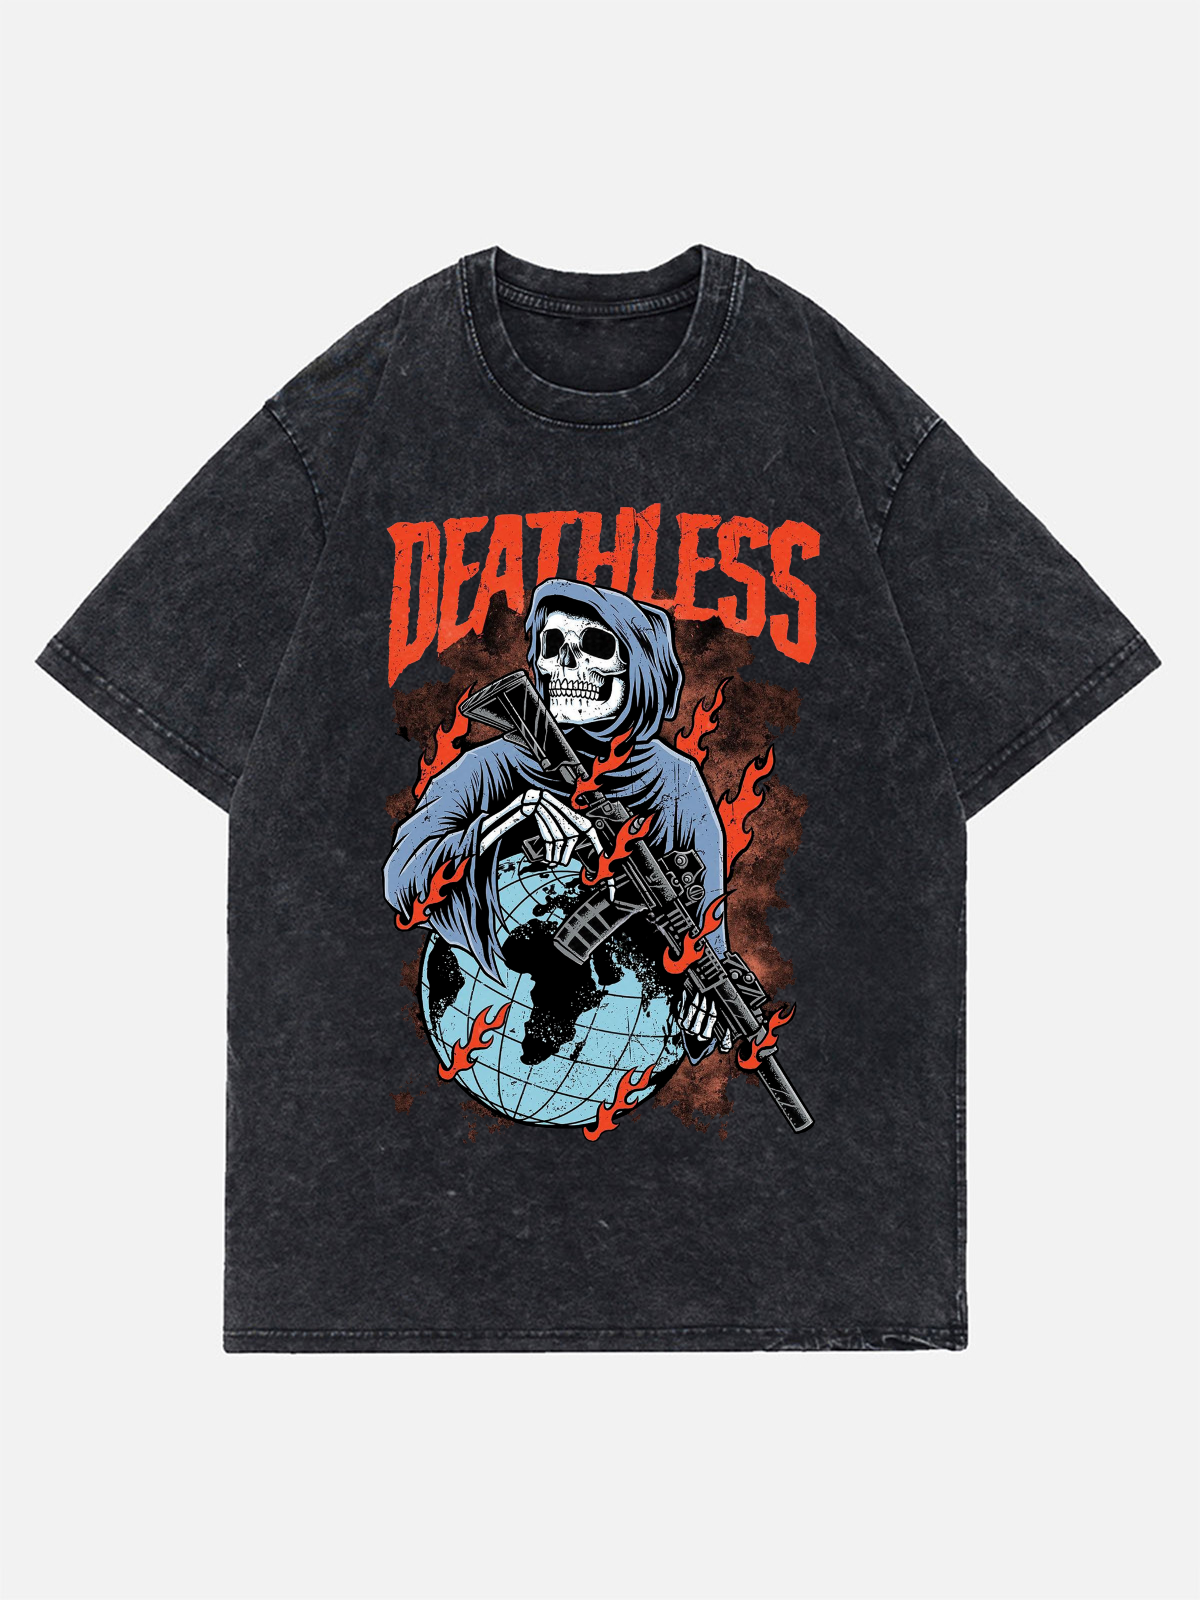 Deathless Unisex Vintage Print Wash Denim T-Shirt 